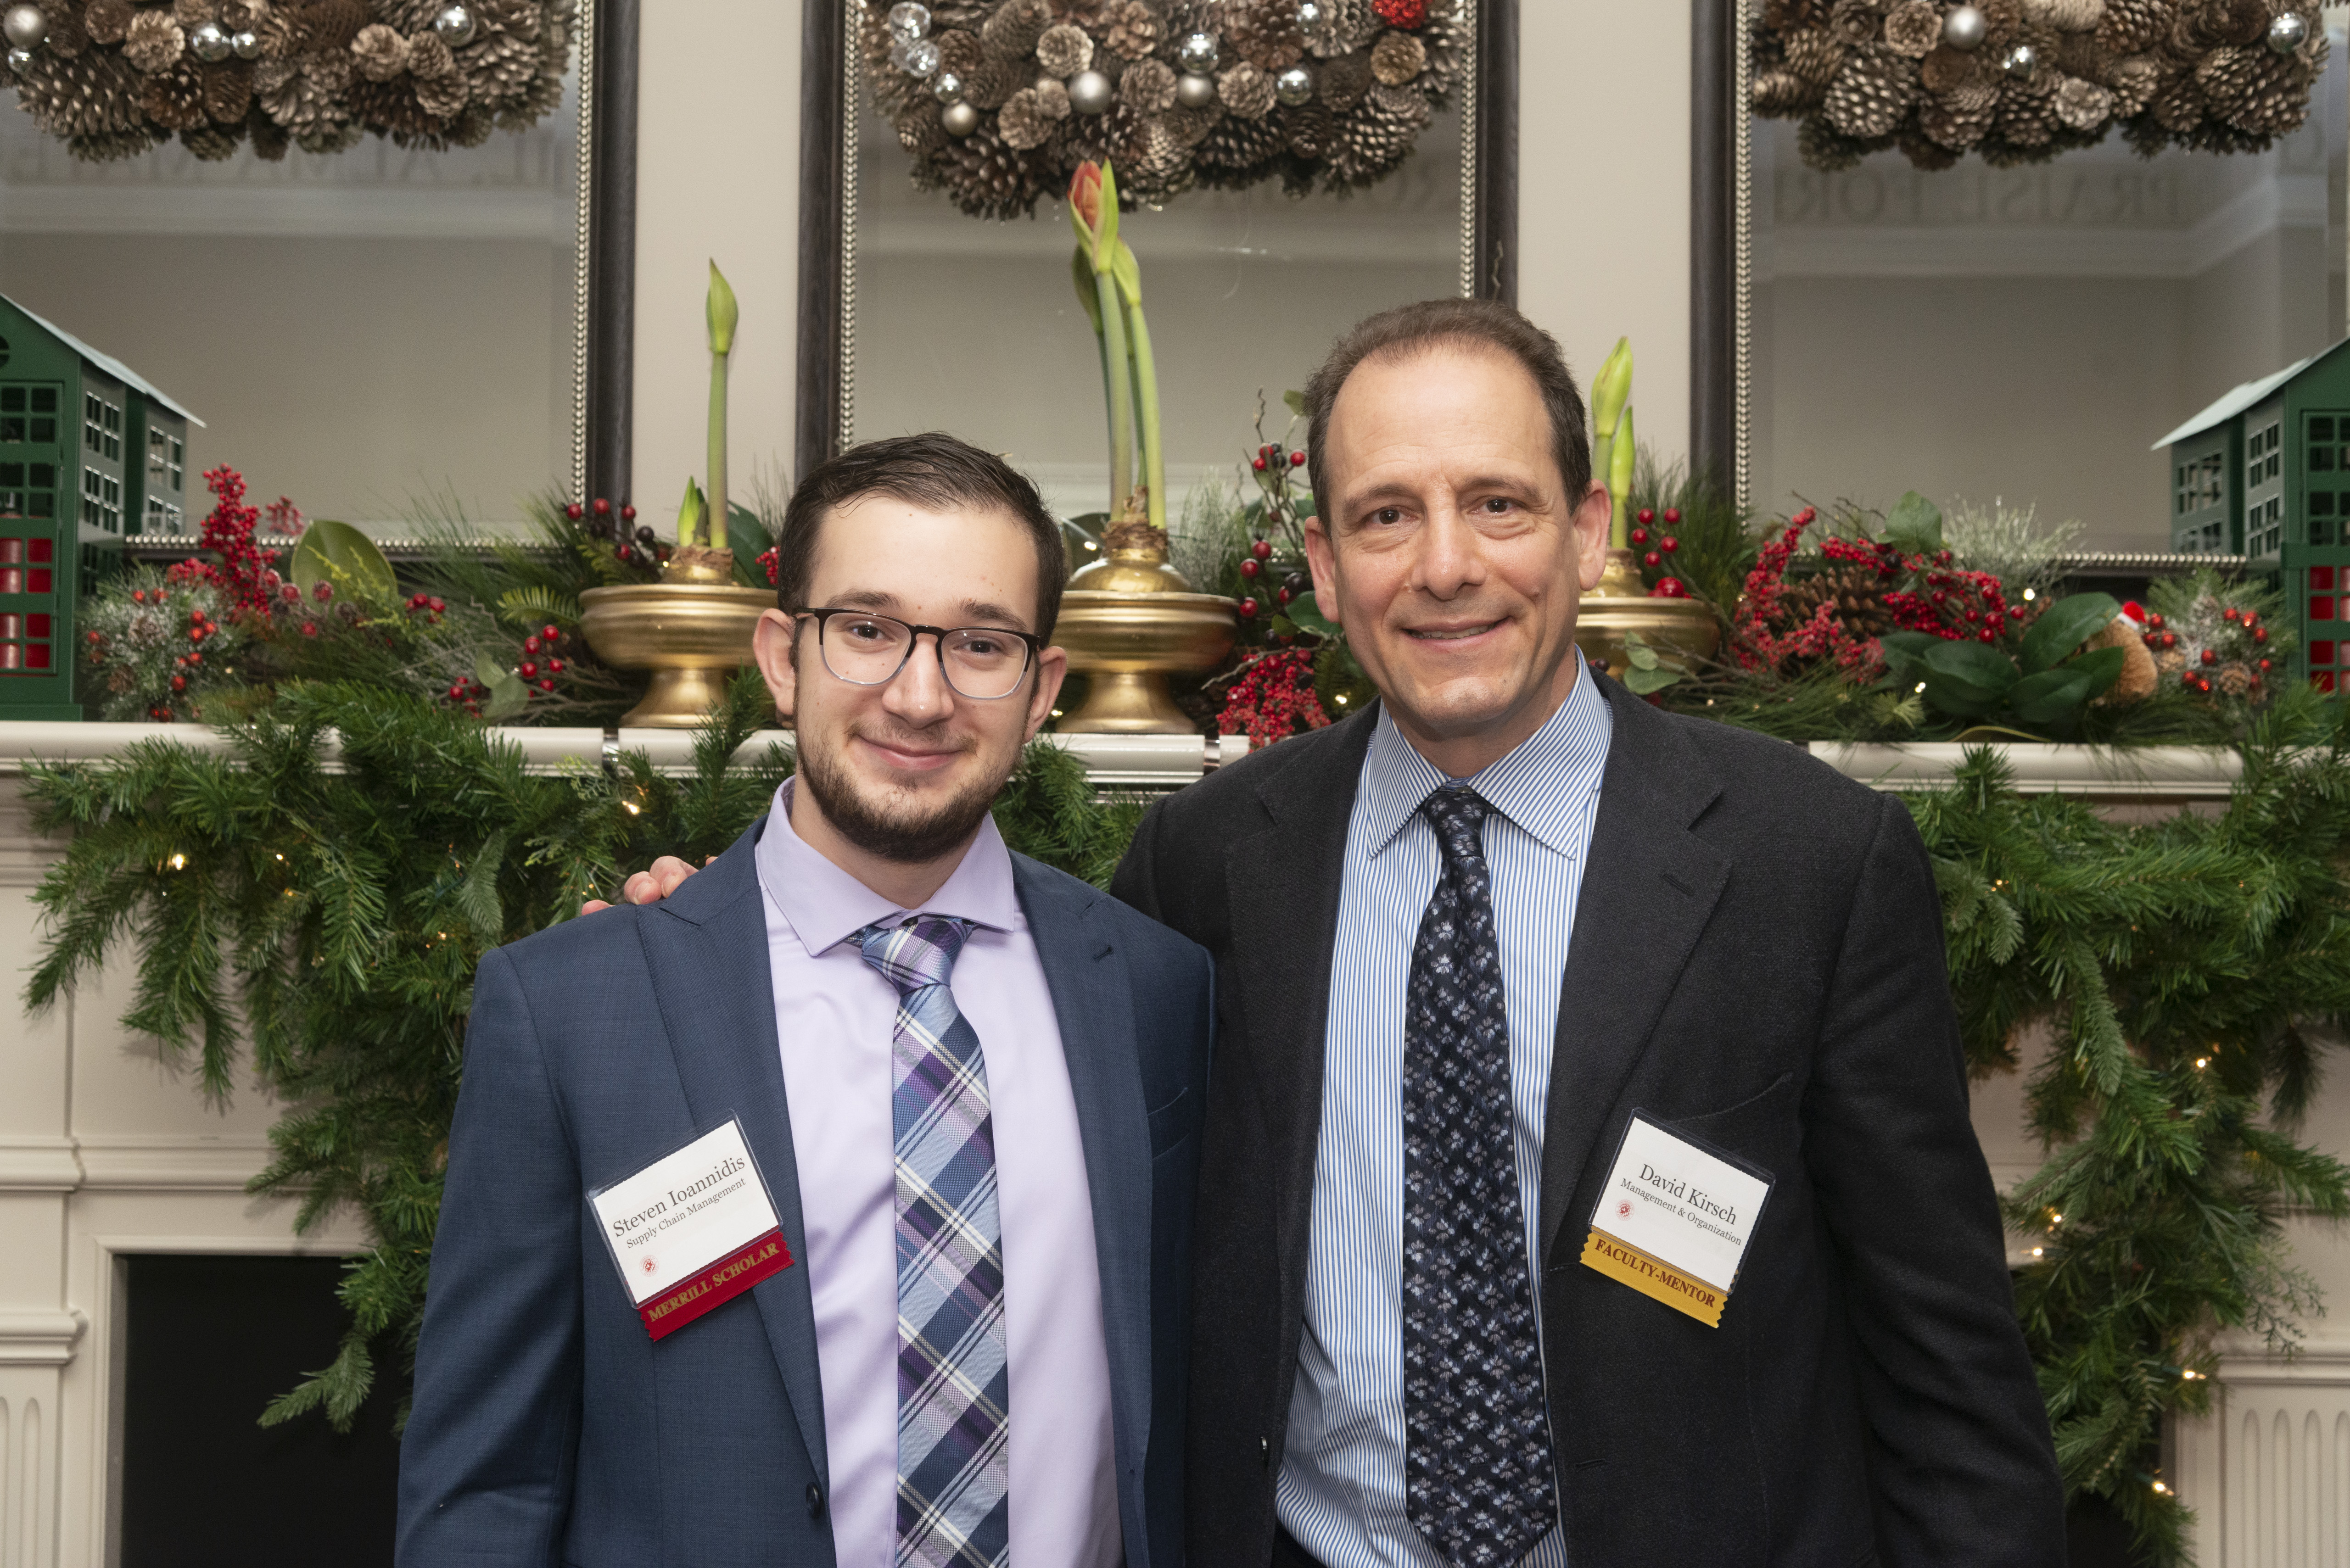 Merrill Scholar Steven Ioannidis with mentor David Kirsch